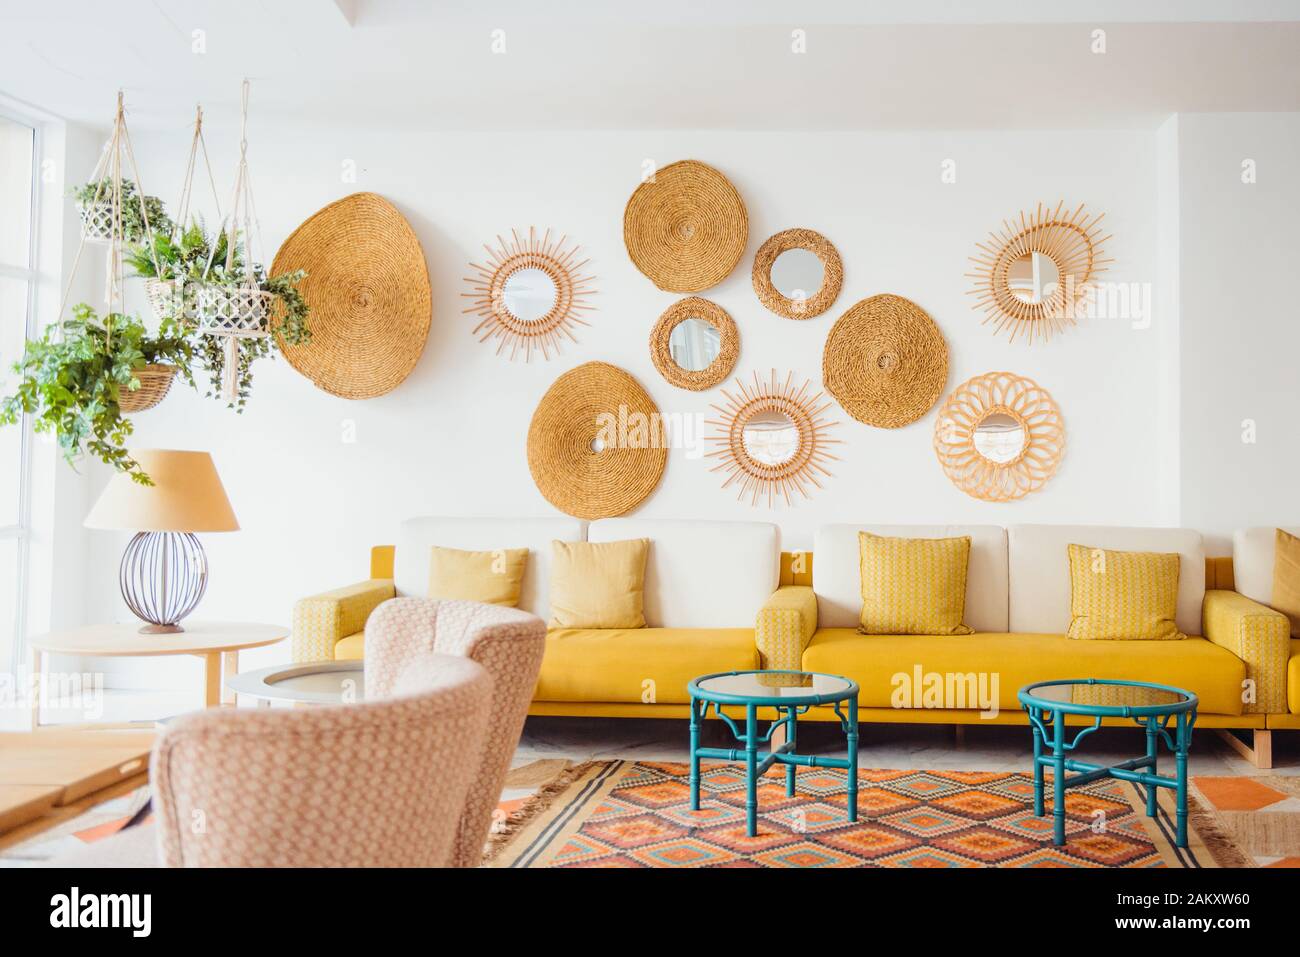 Modern minimal home interior design. Yellow sofa with pillows, green tables, fresh green plants in hanging pots, decorative straw decor, Scandinavian Stock Photo